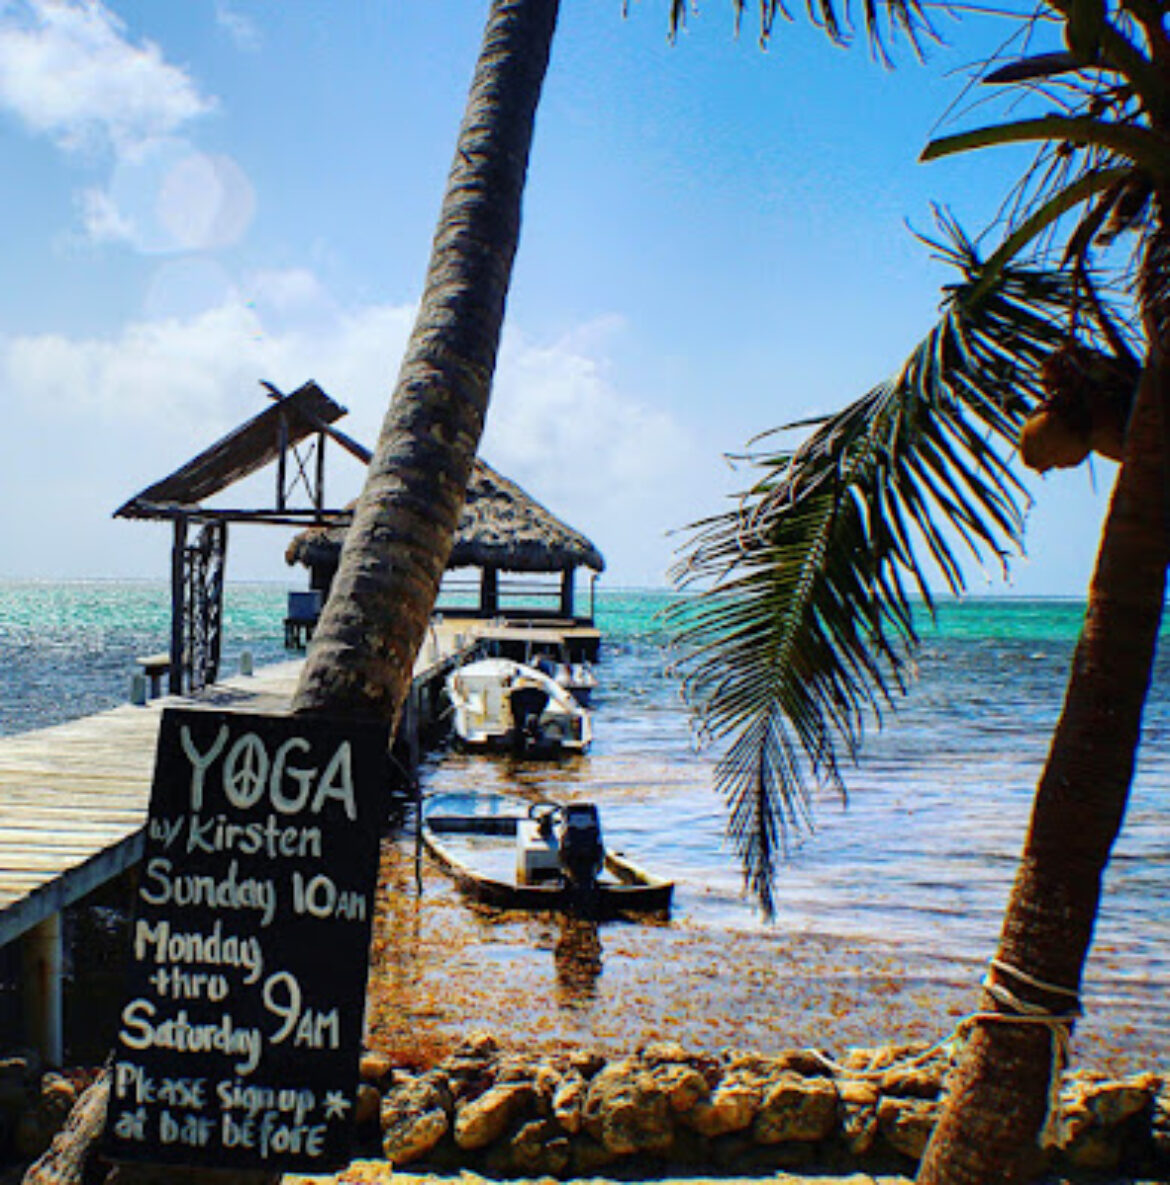 Remax Vip Belize: Yoga